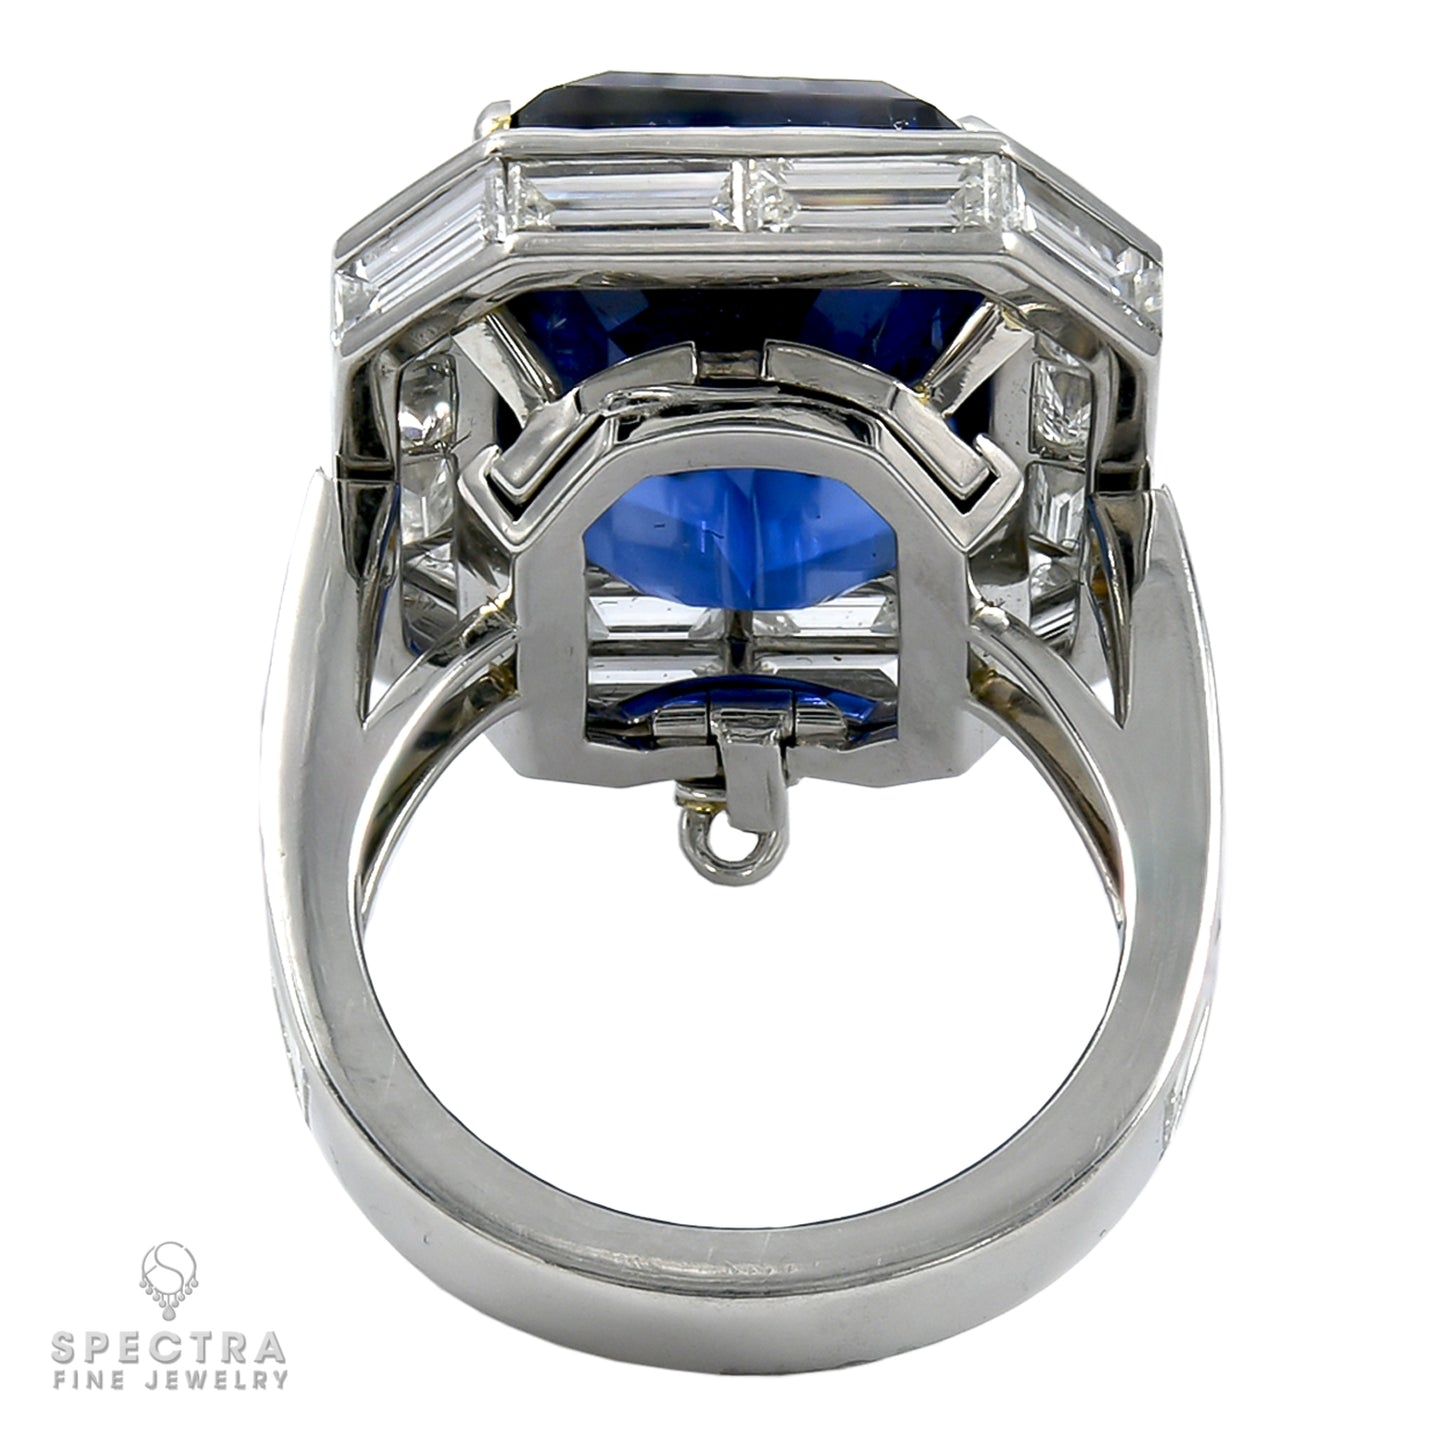 Spectra Fine Jewelry GRS Certified 20.12 Carat Blue Sapphire Diamond Ring